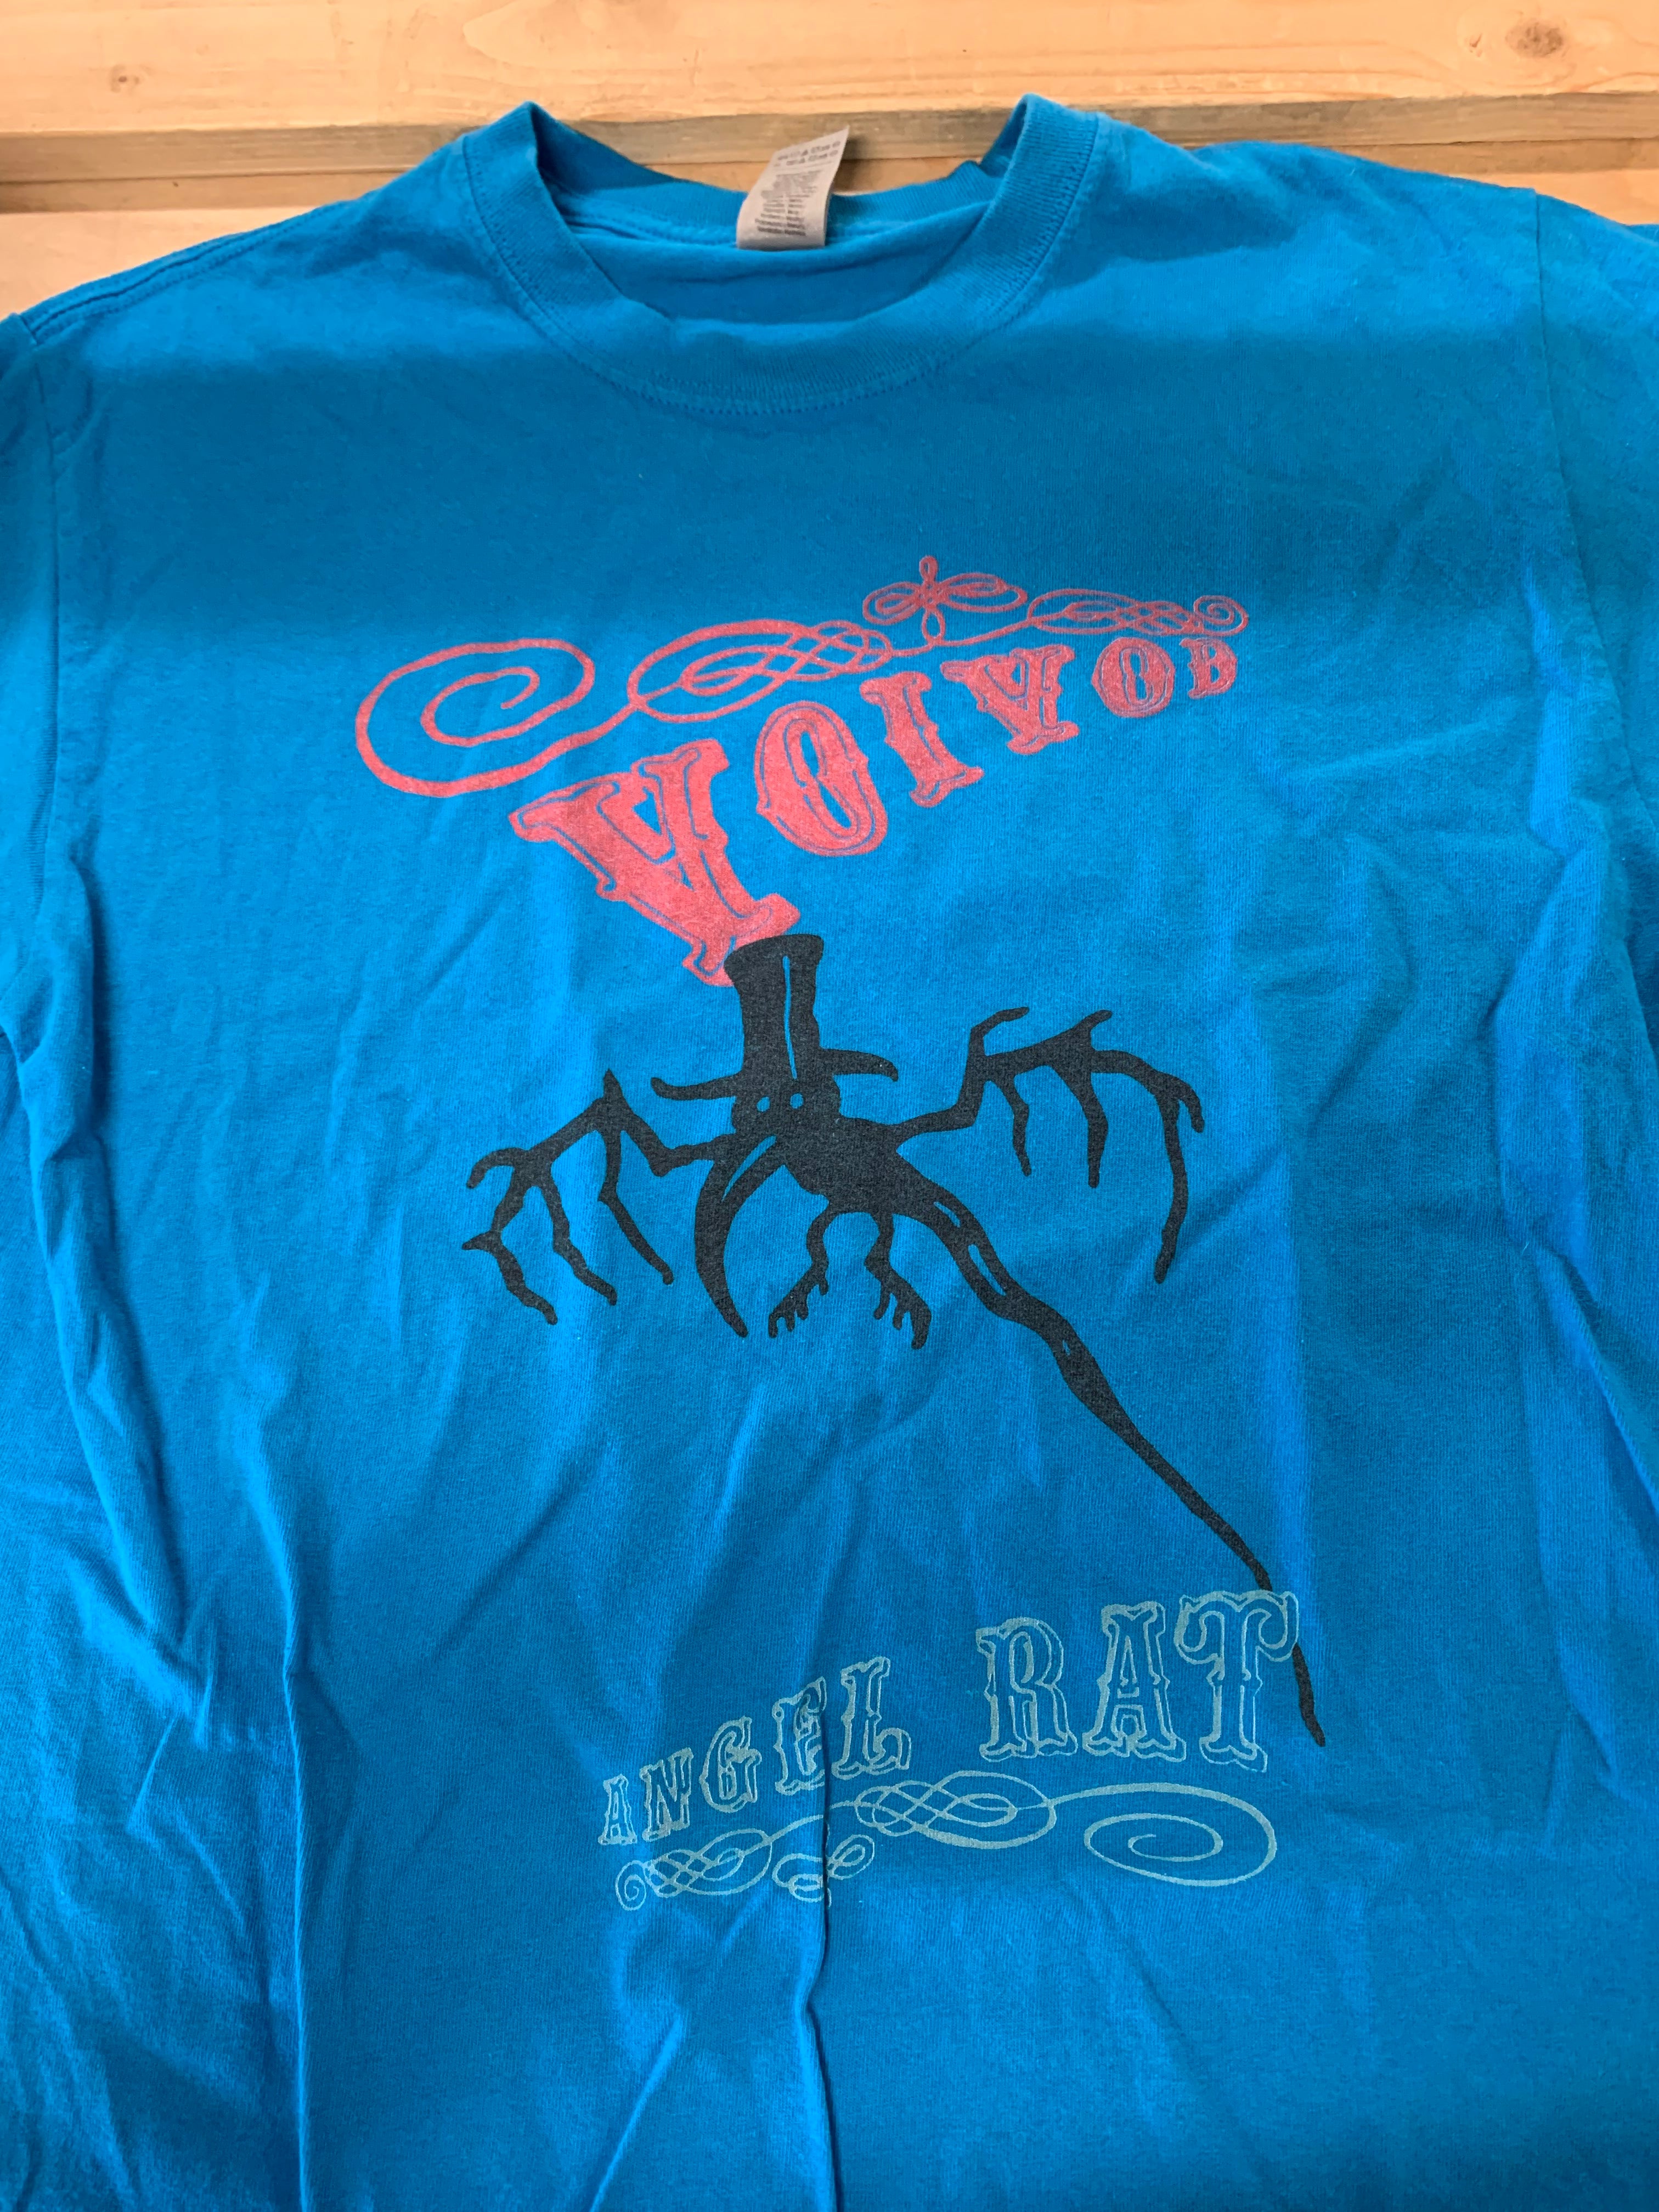 Voivod Angel Rat T-Shirt, Blue, M